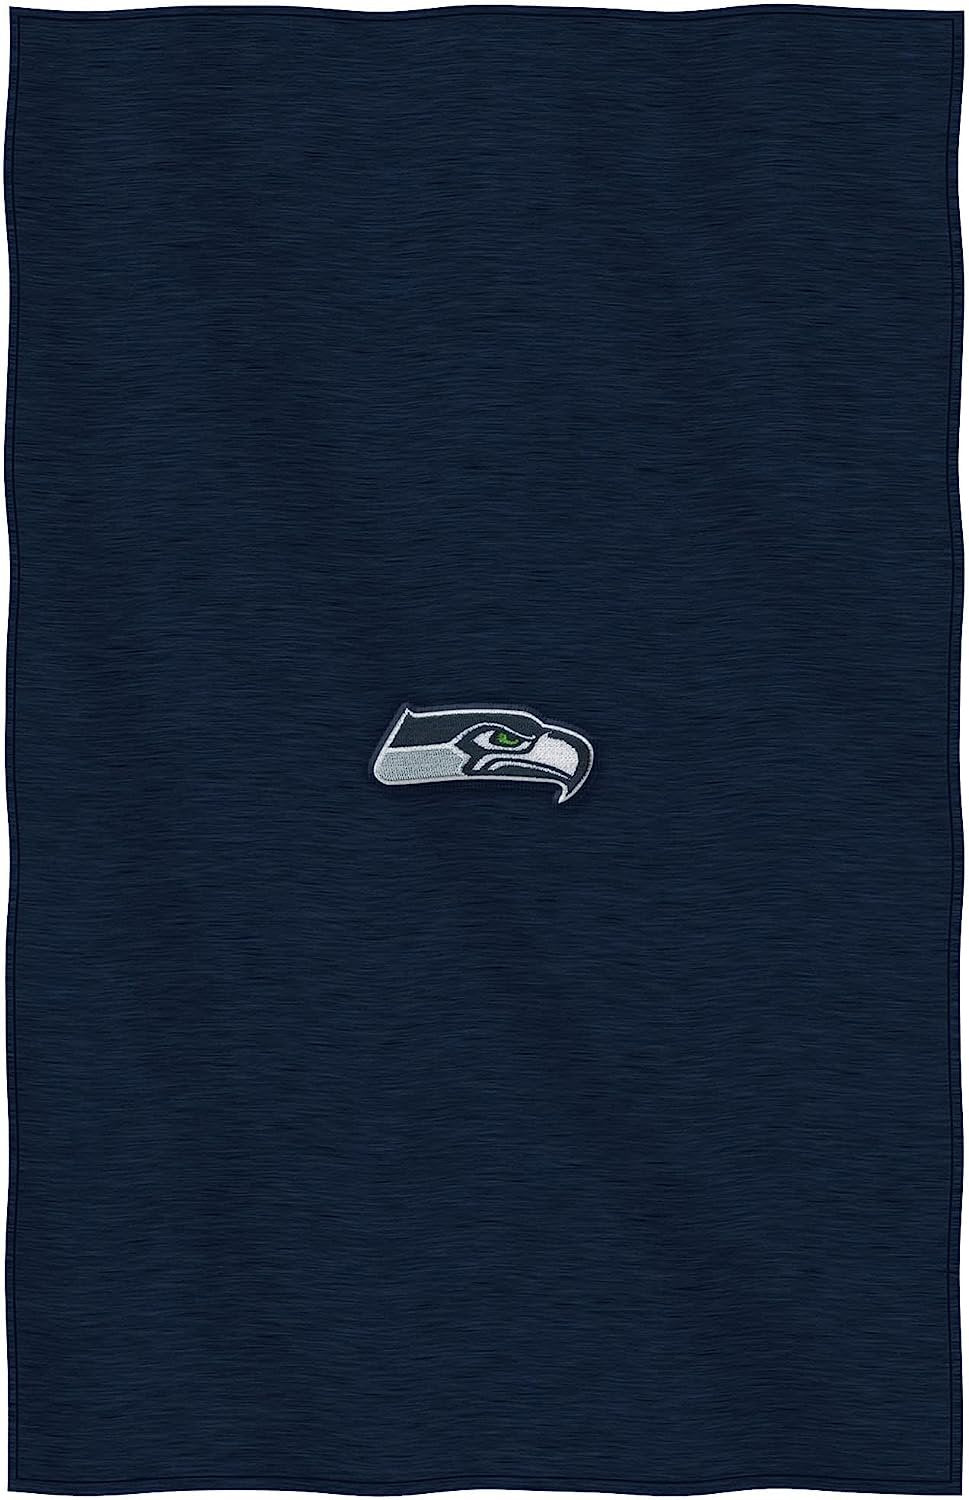 Seattle Seahawks Throw Blanket, Sweatshirt Design, Embroidered Logo, Dominate Style, 54x84 Inch